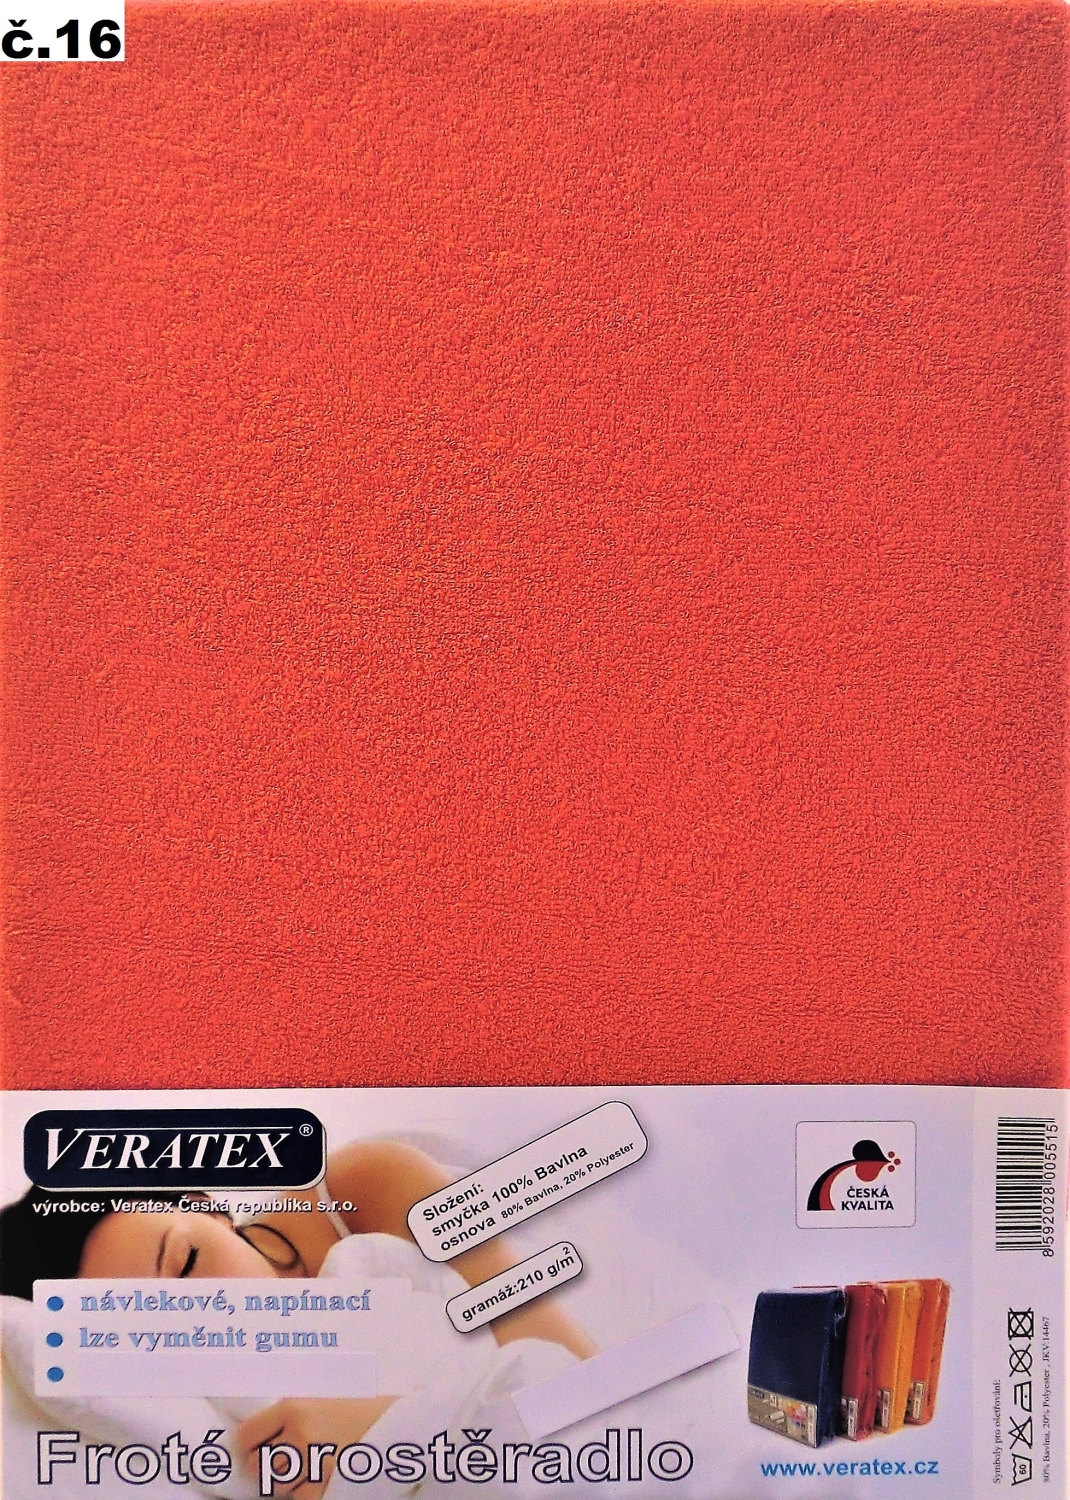 Veratex Froté prostěradlo jednolůžko 100x200/25cm (č.16 malinové)